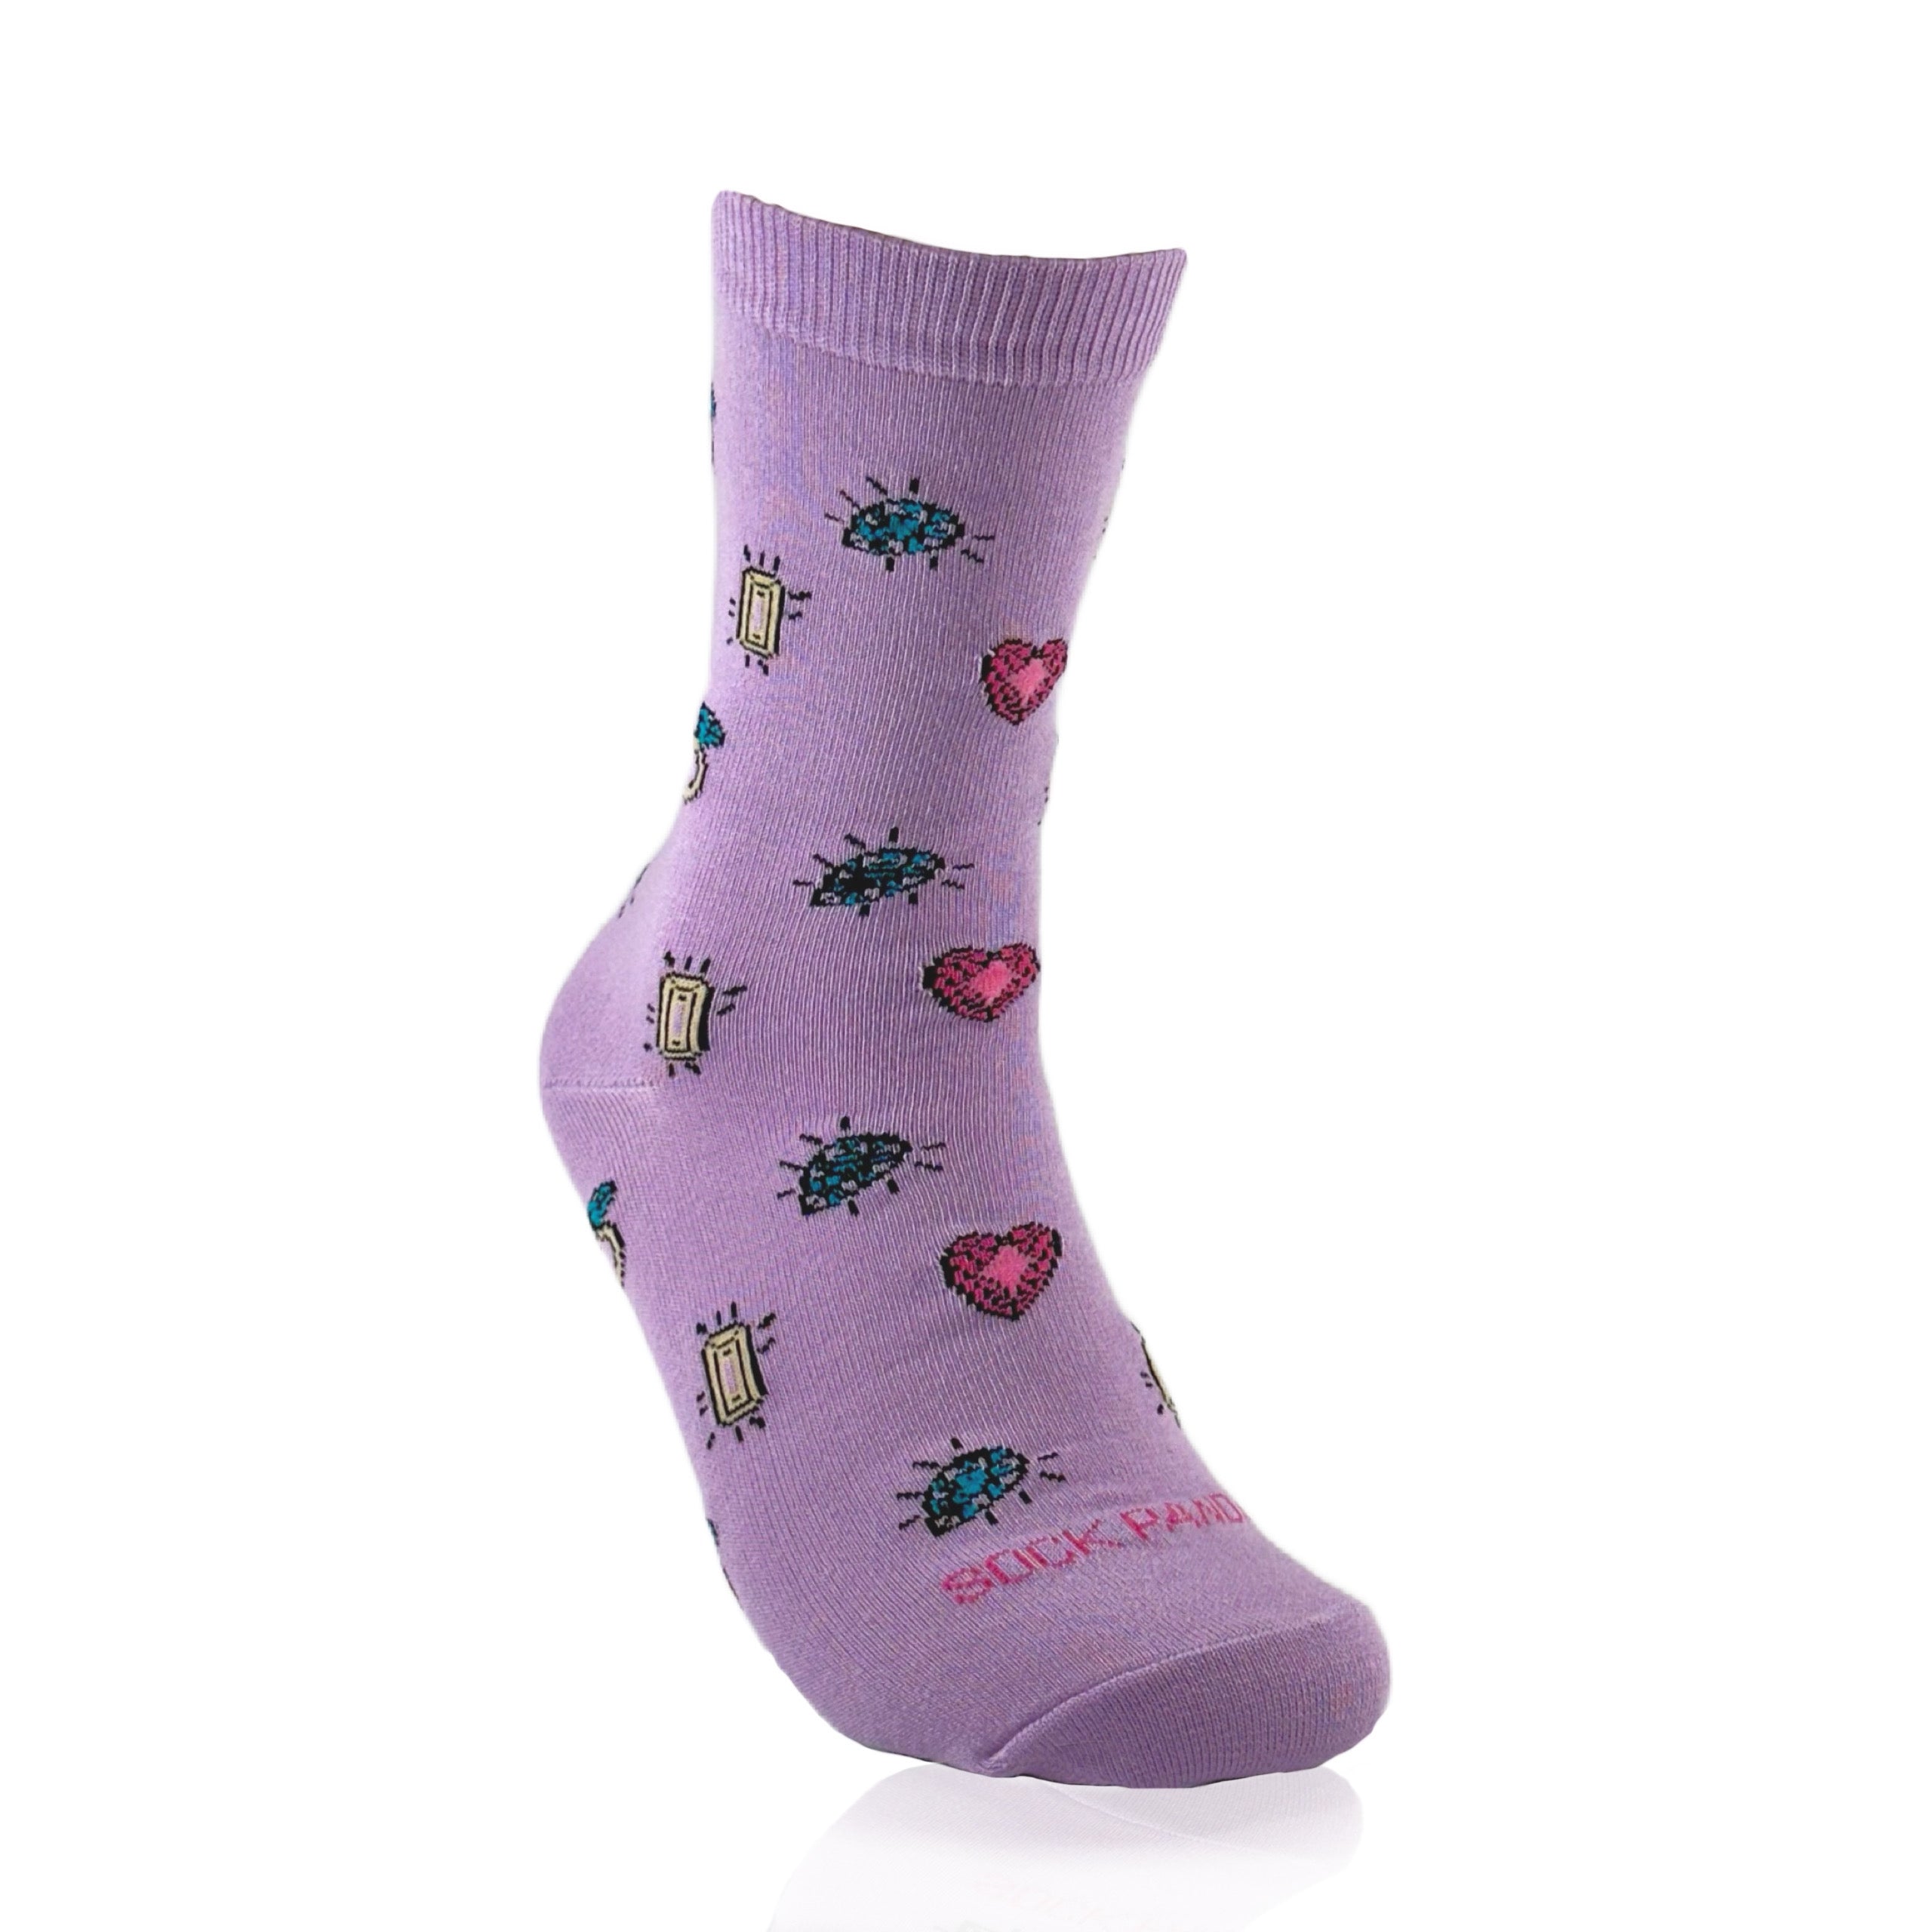 Love Heart and Jewels Socks from the Sock Panda (Adult Medium)